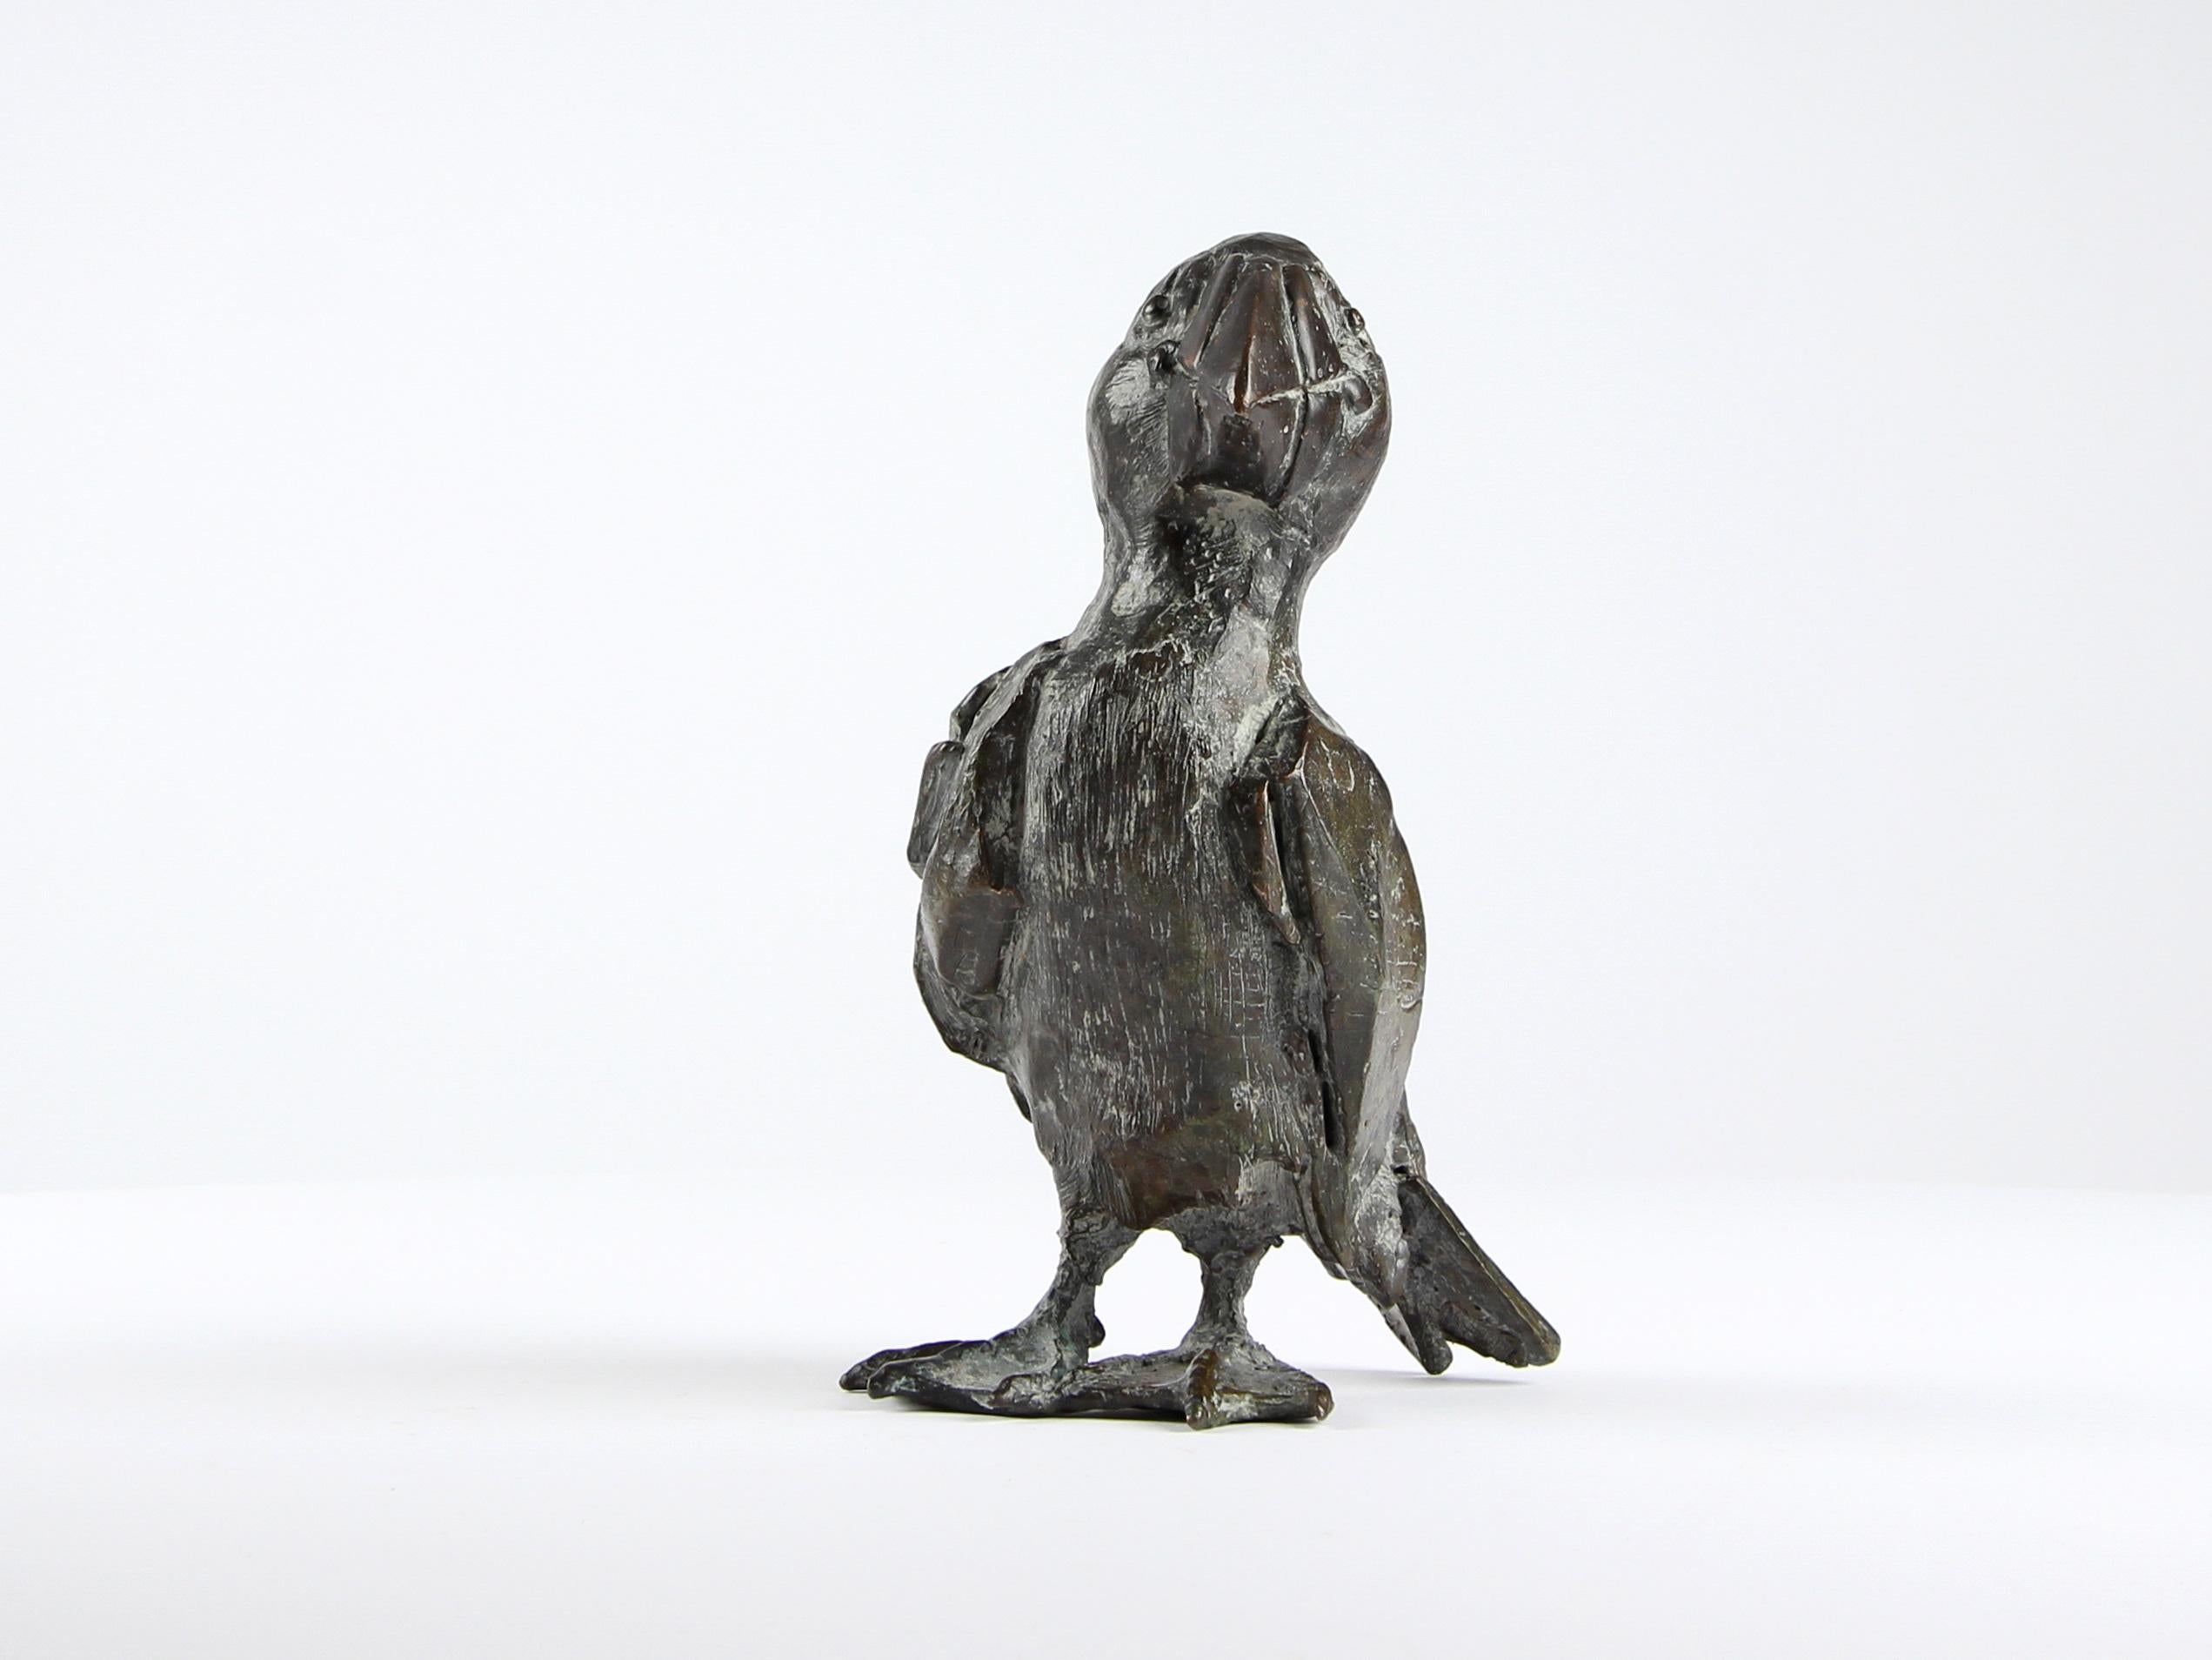 Puffin by Chésade - Bronze sculpture, animal art, expressionism, realism, bird For Sale 1